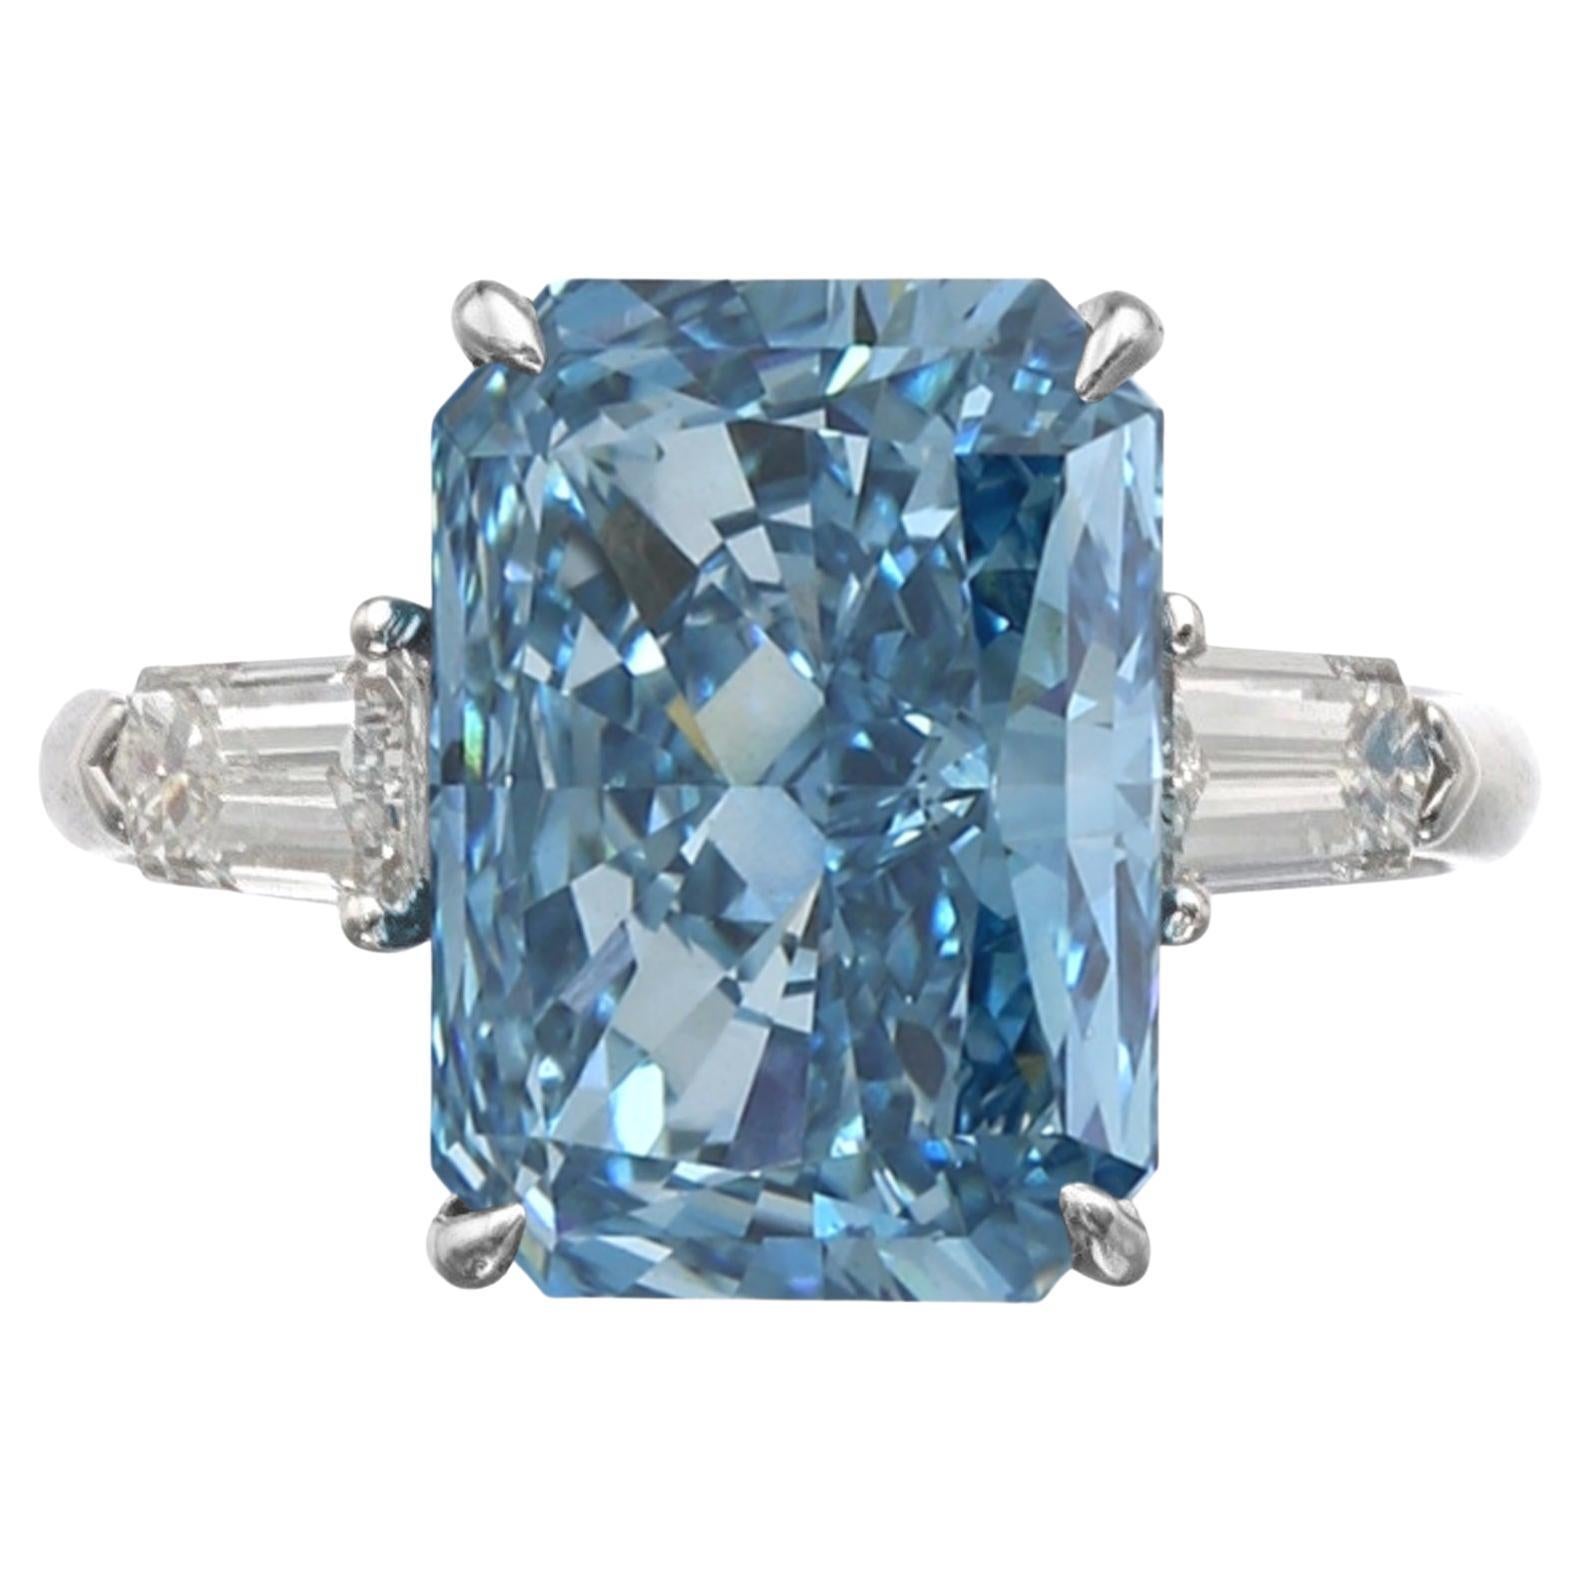 GIA Certified 3.63 Carat Fancy Greenish Blue Radiant Cut Diamond Ring